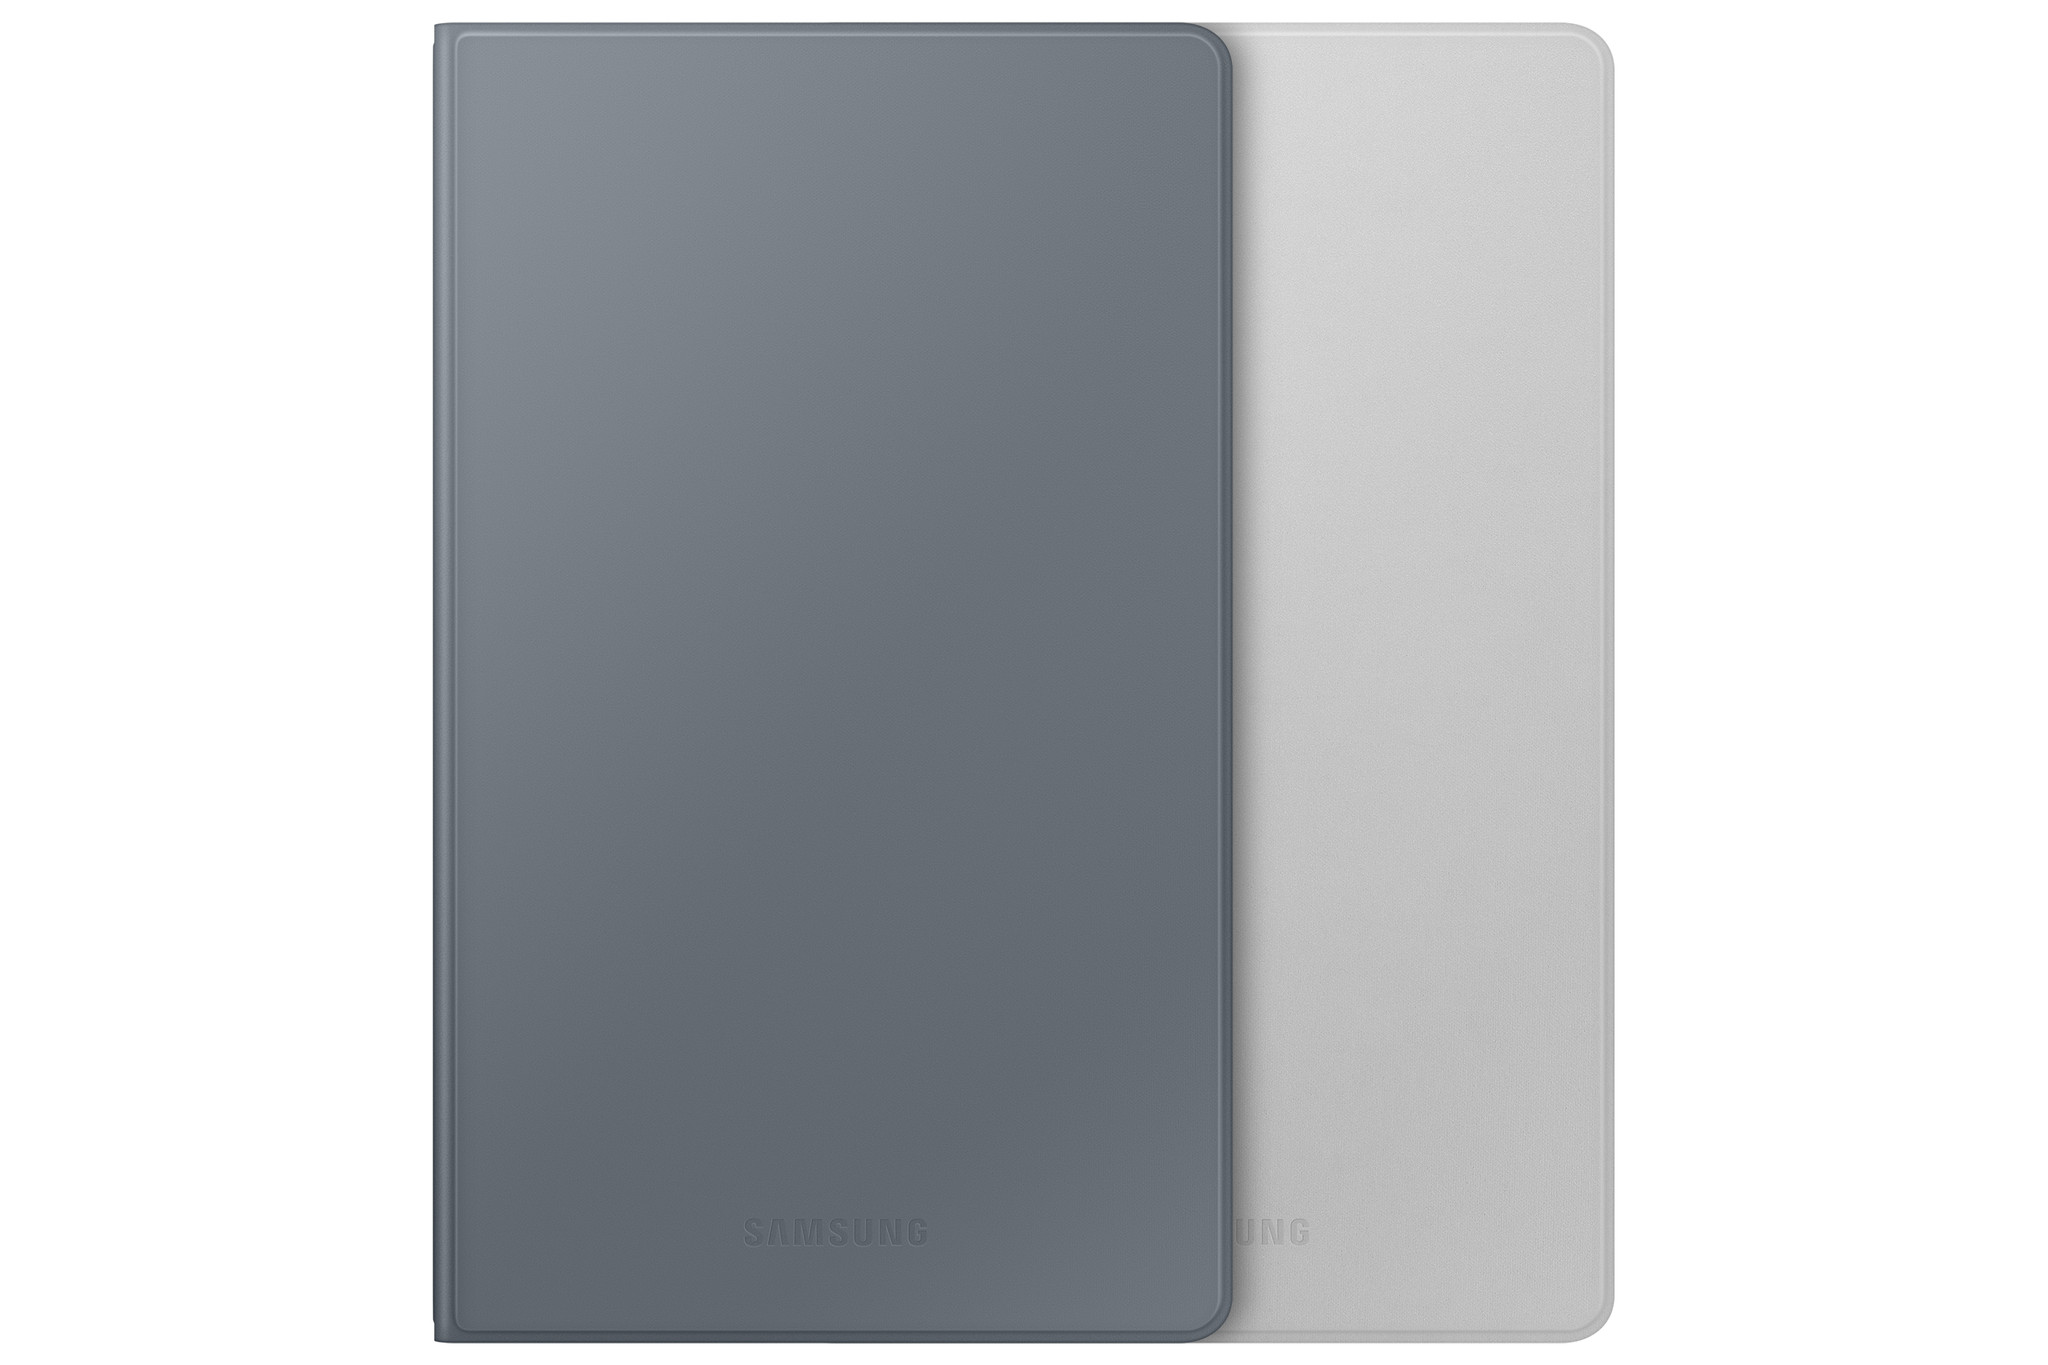 -Hacken A7 Samsung SAMSUNG für Polycarbonaat, Kunstleer, Galaxy Tab Lite Bookcover Tablethülle - Cover Buch - Grau Dunkelgrau